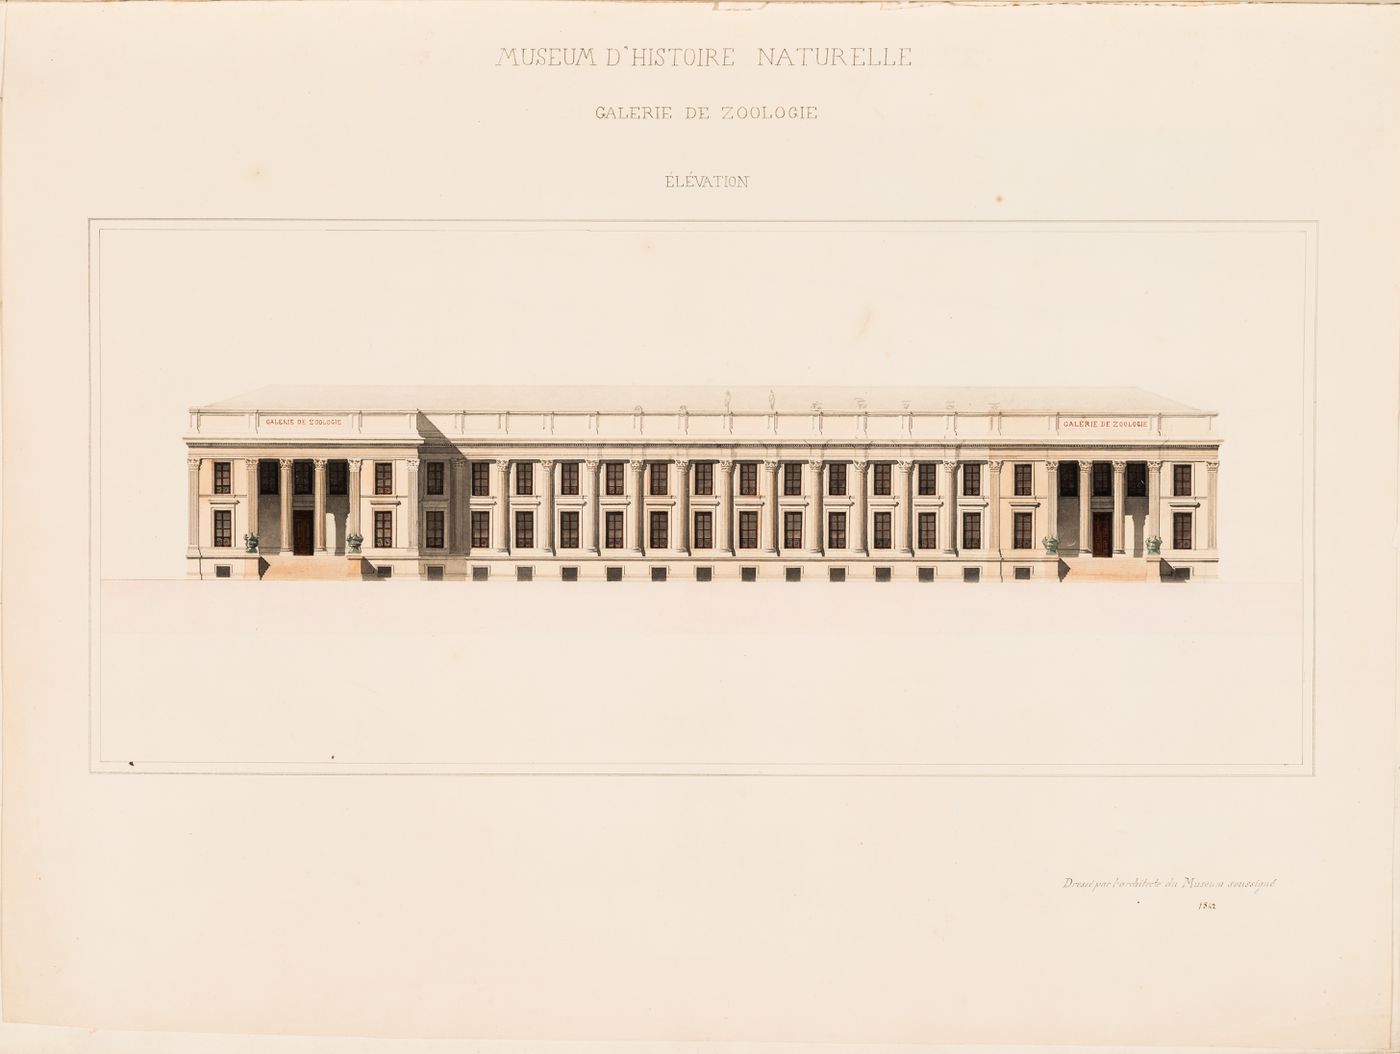 Project for a Galerie de zoologie, 1842: Principal elevation